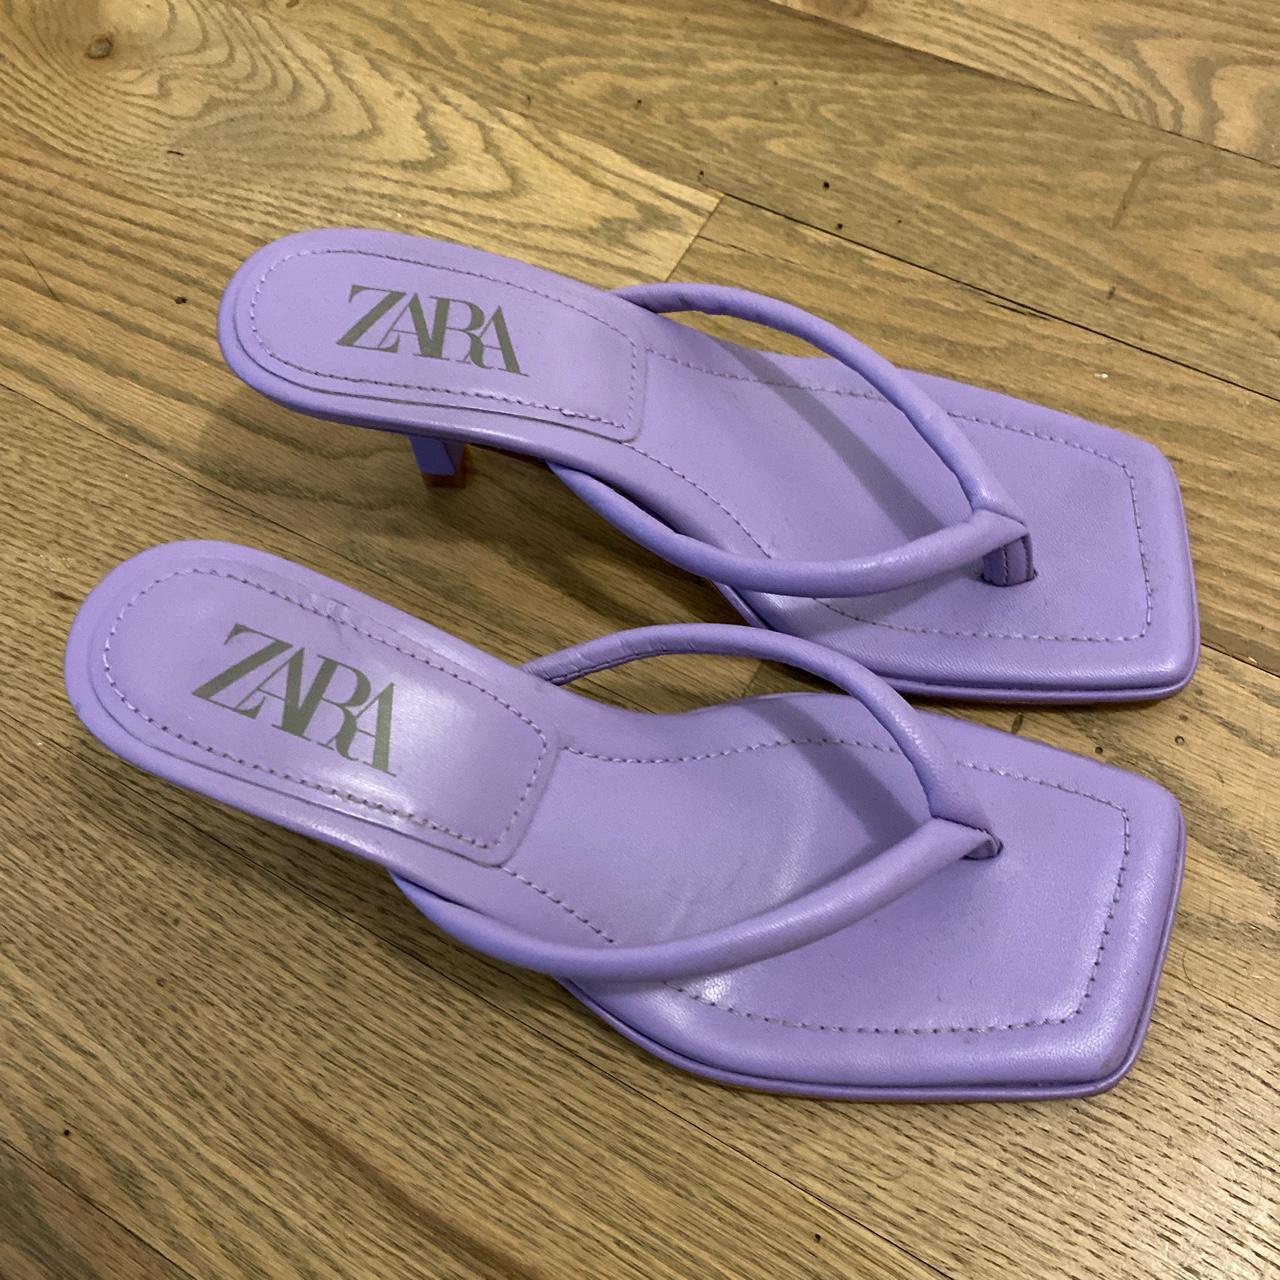 Product Image 1 - Zara lilac sandal heels size